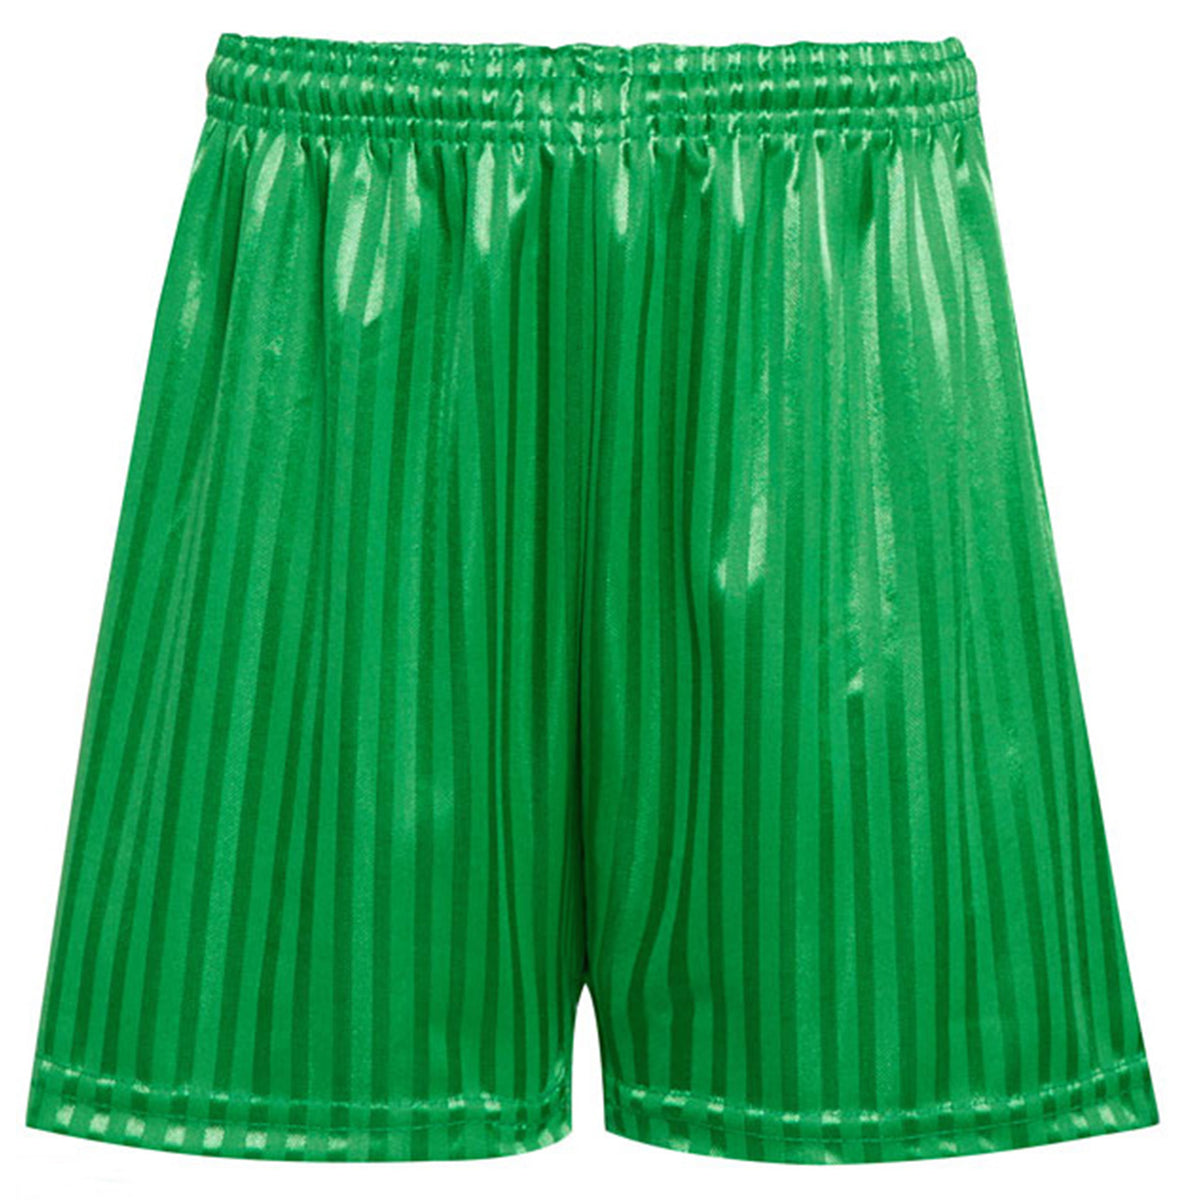 Games Shorts Shadow Stripe: Emerald